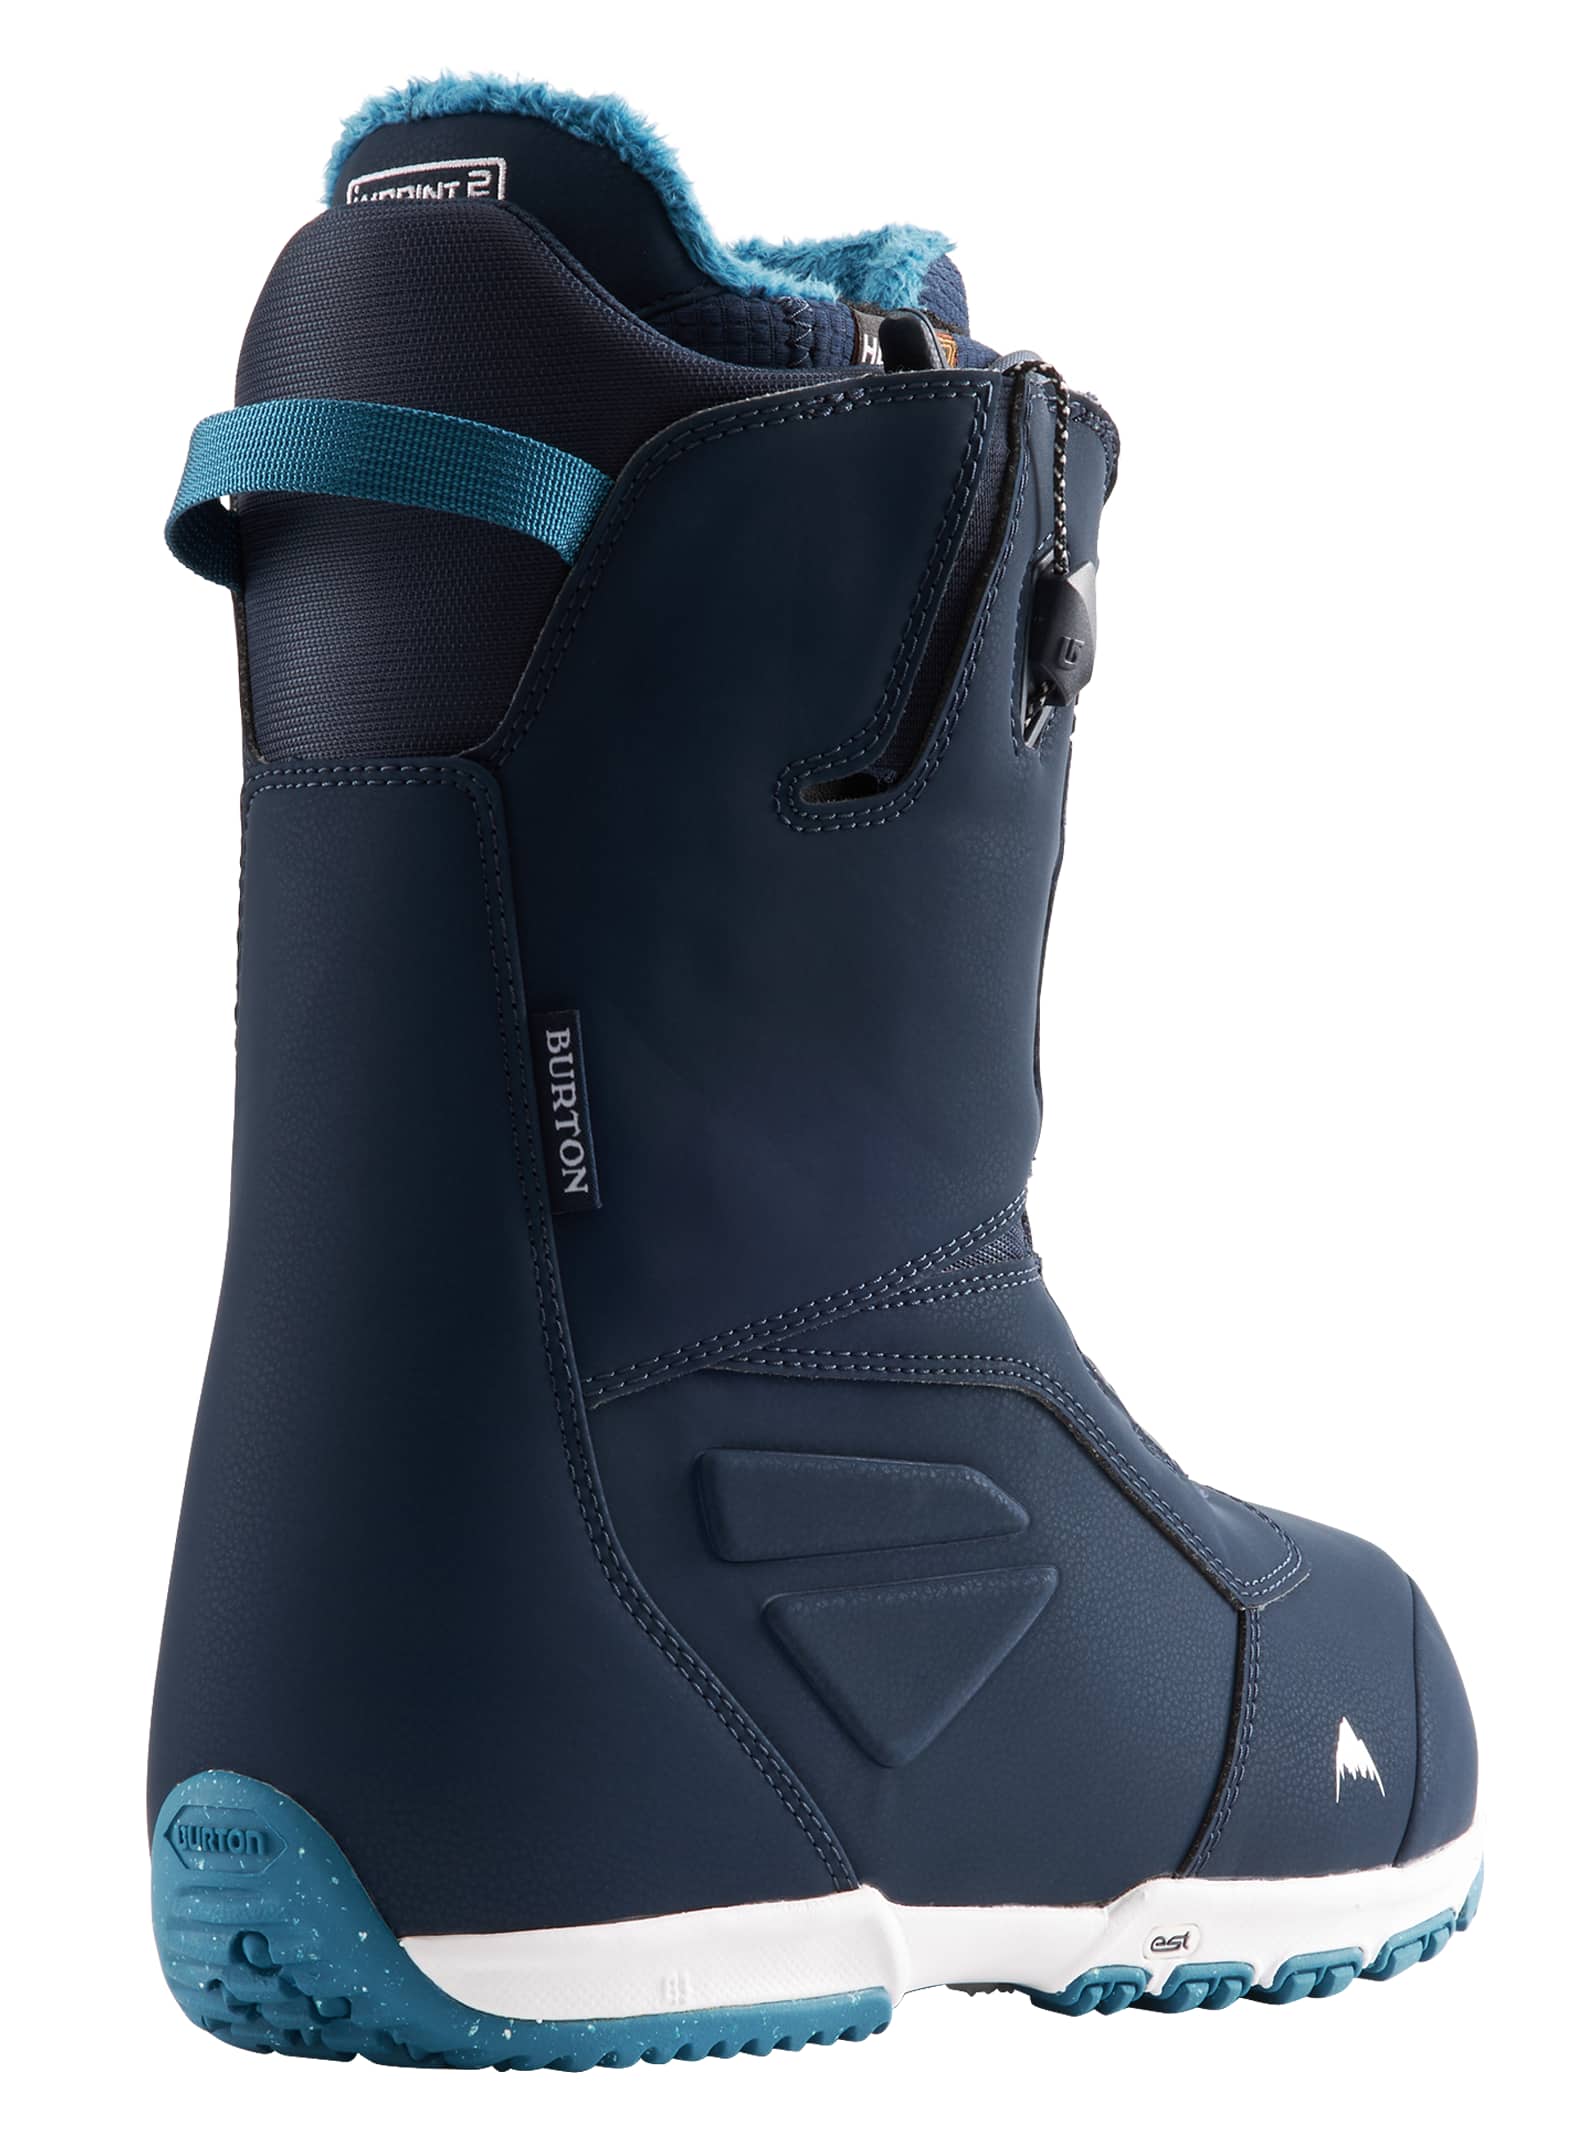 Burton Size 6.5 Ski & Snowboard Boots for Men